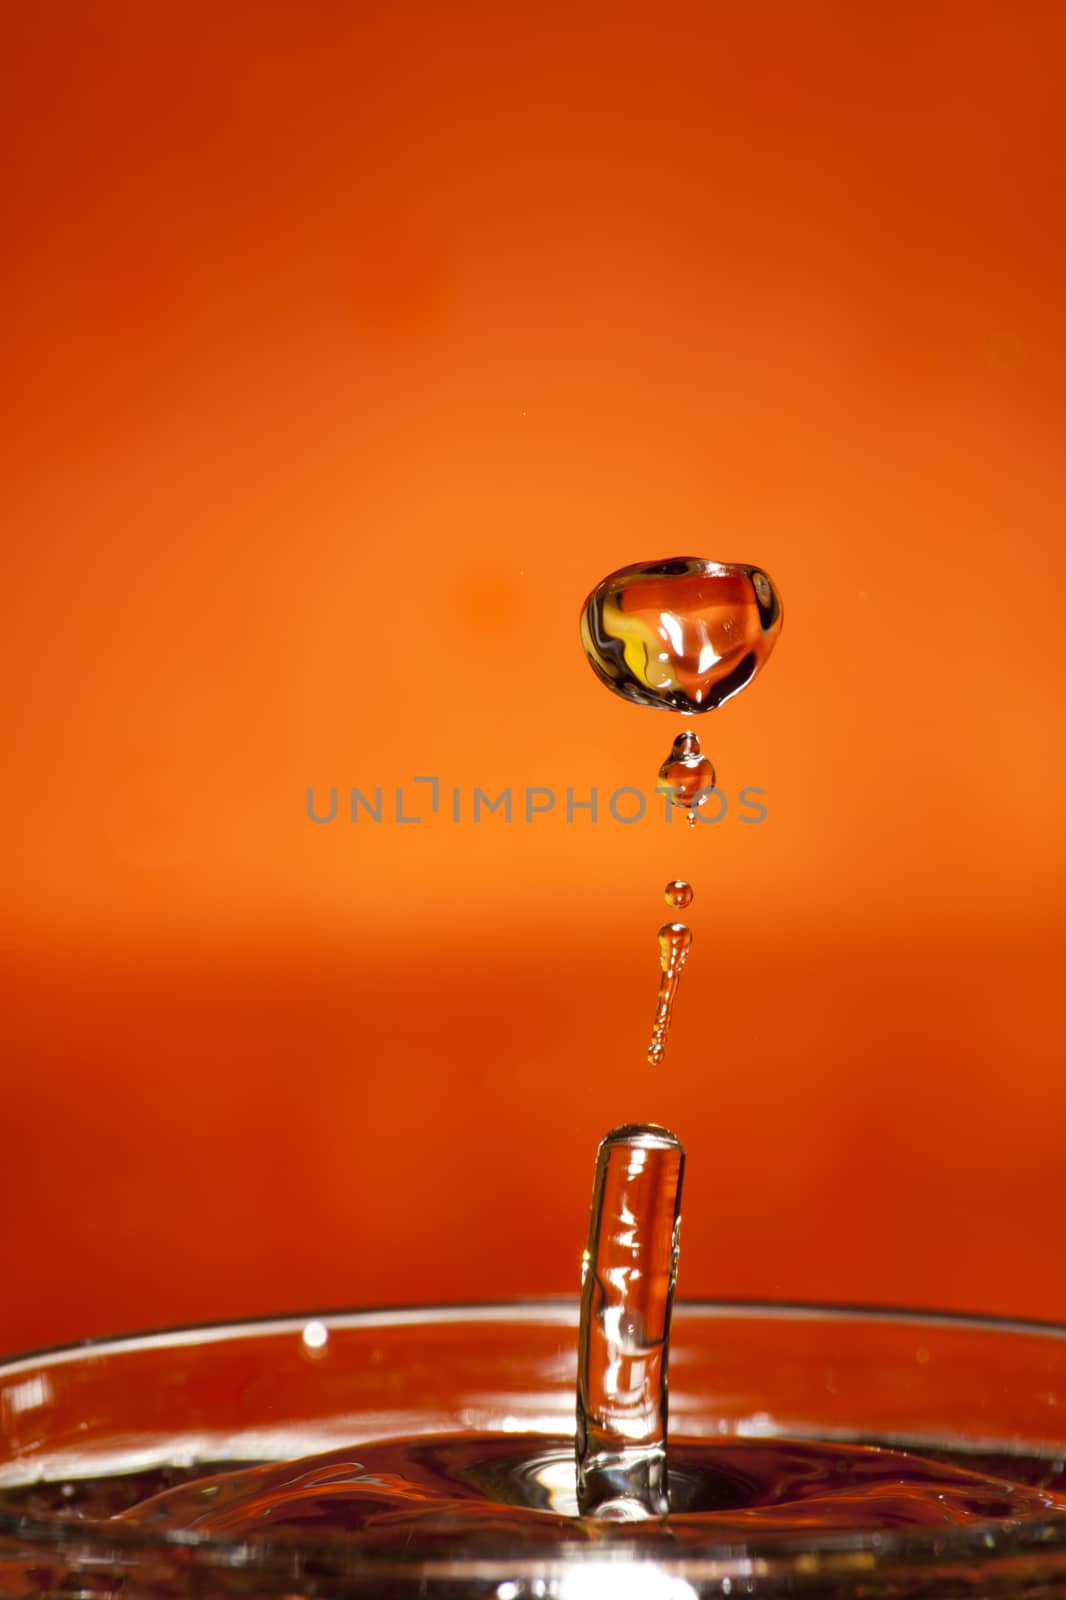 Drop of water by nicobernieri